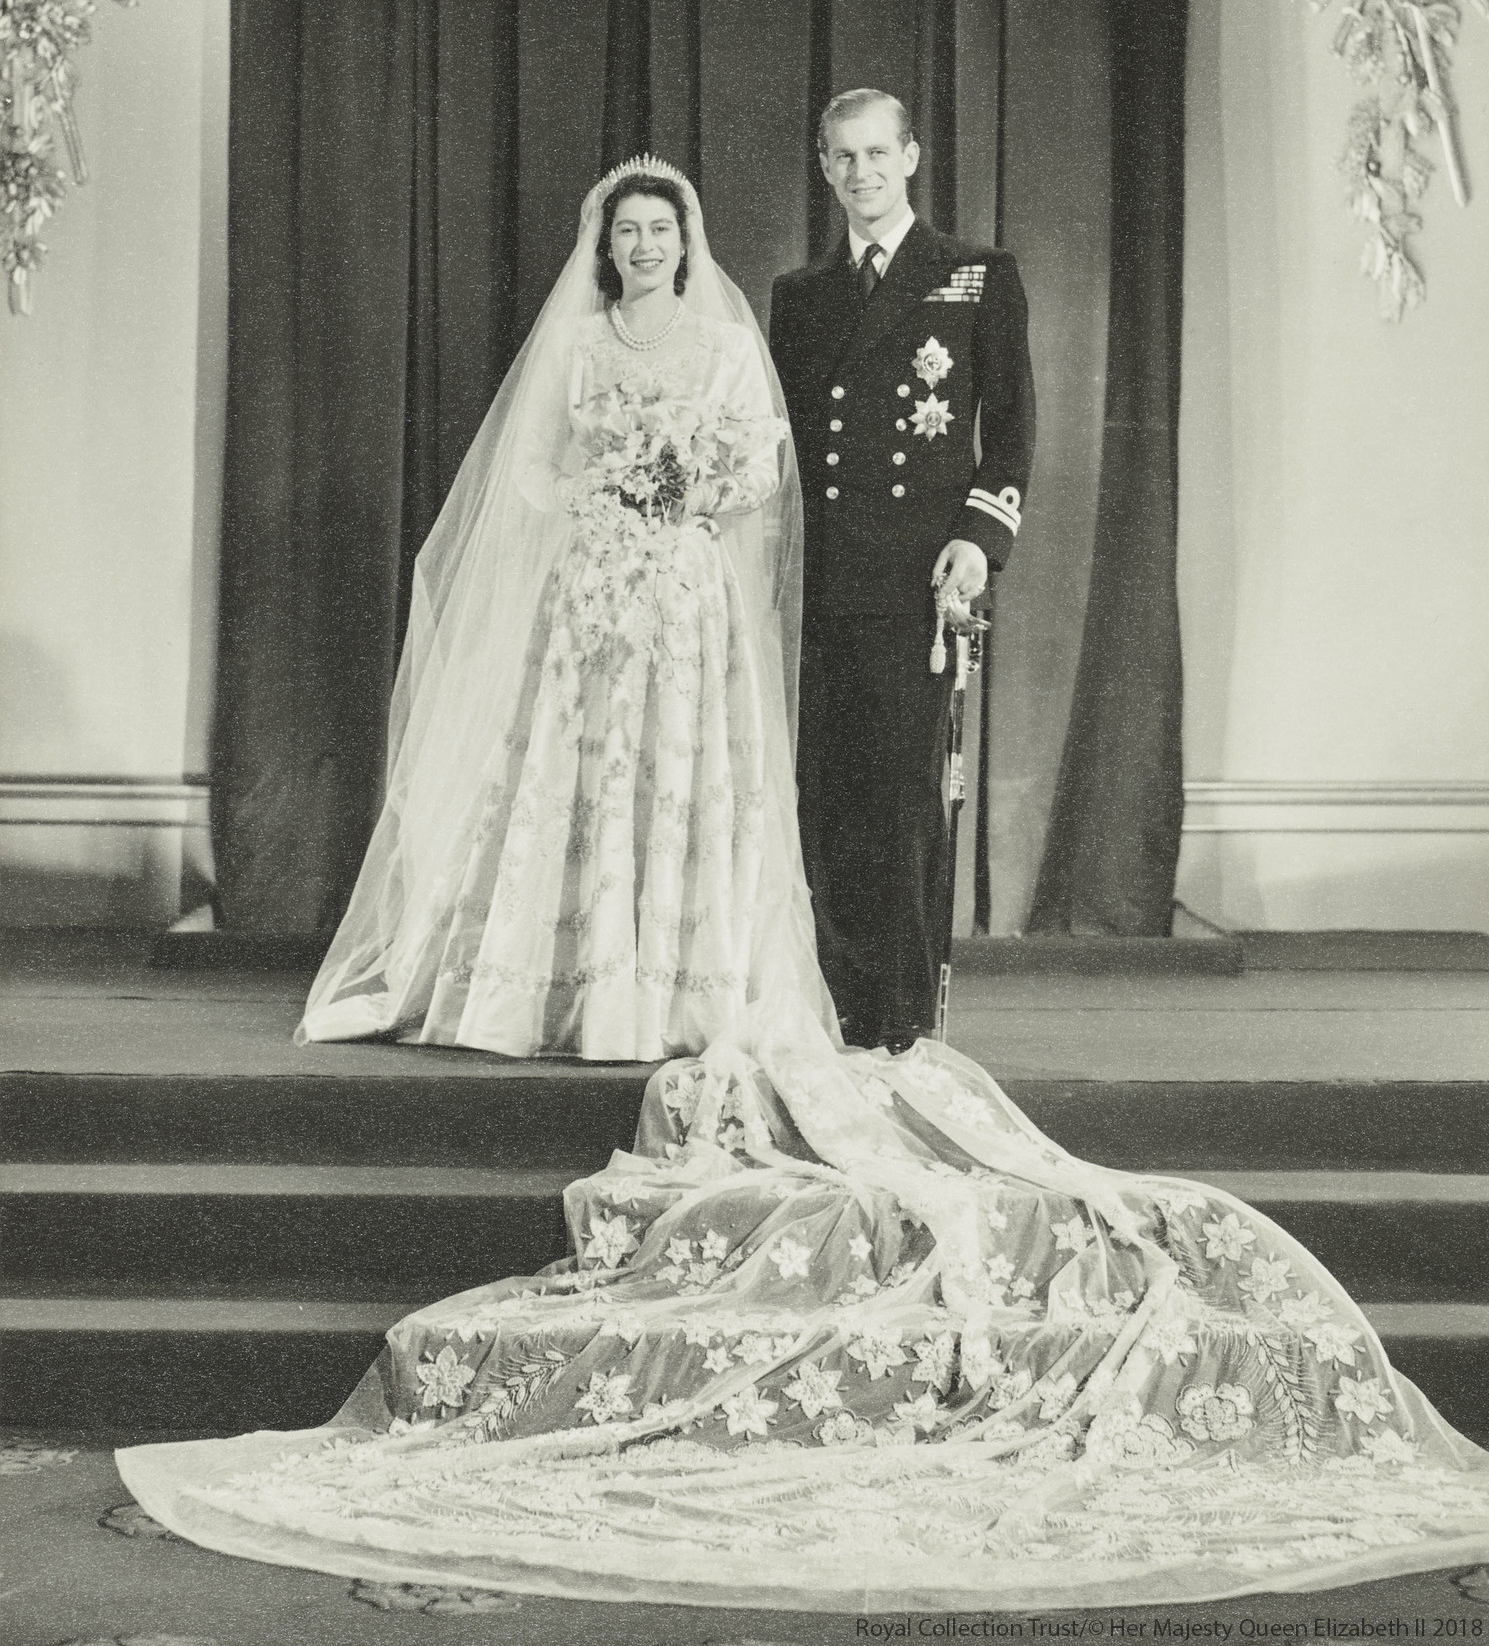 Royal Family Wedding Dresses Throughout History: Photos | Heavy.com